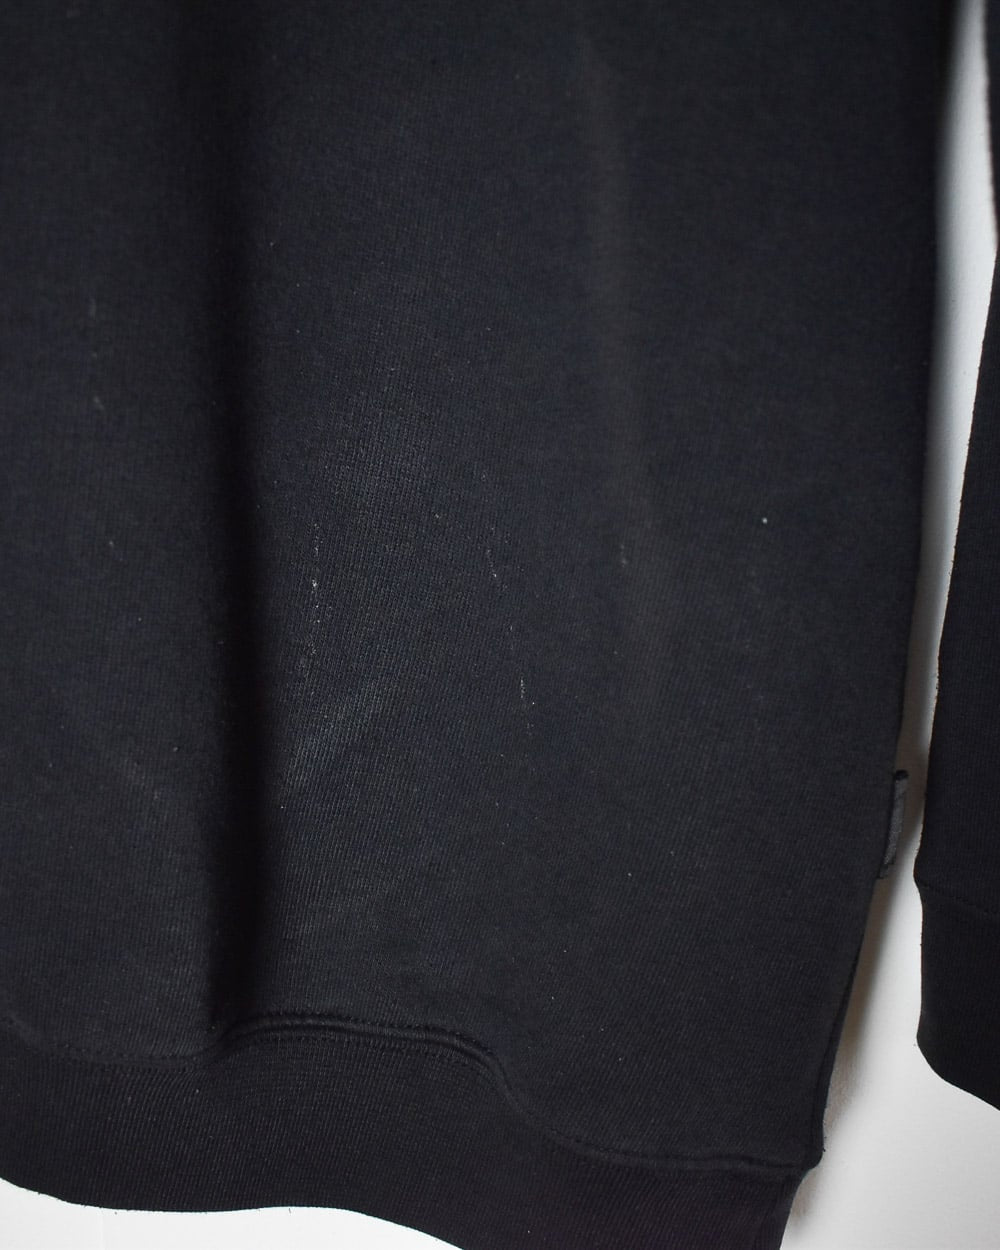 Black Adidas Sweatshirt - X-Small